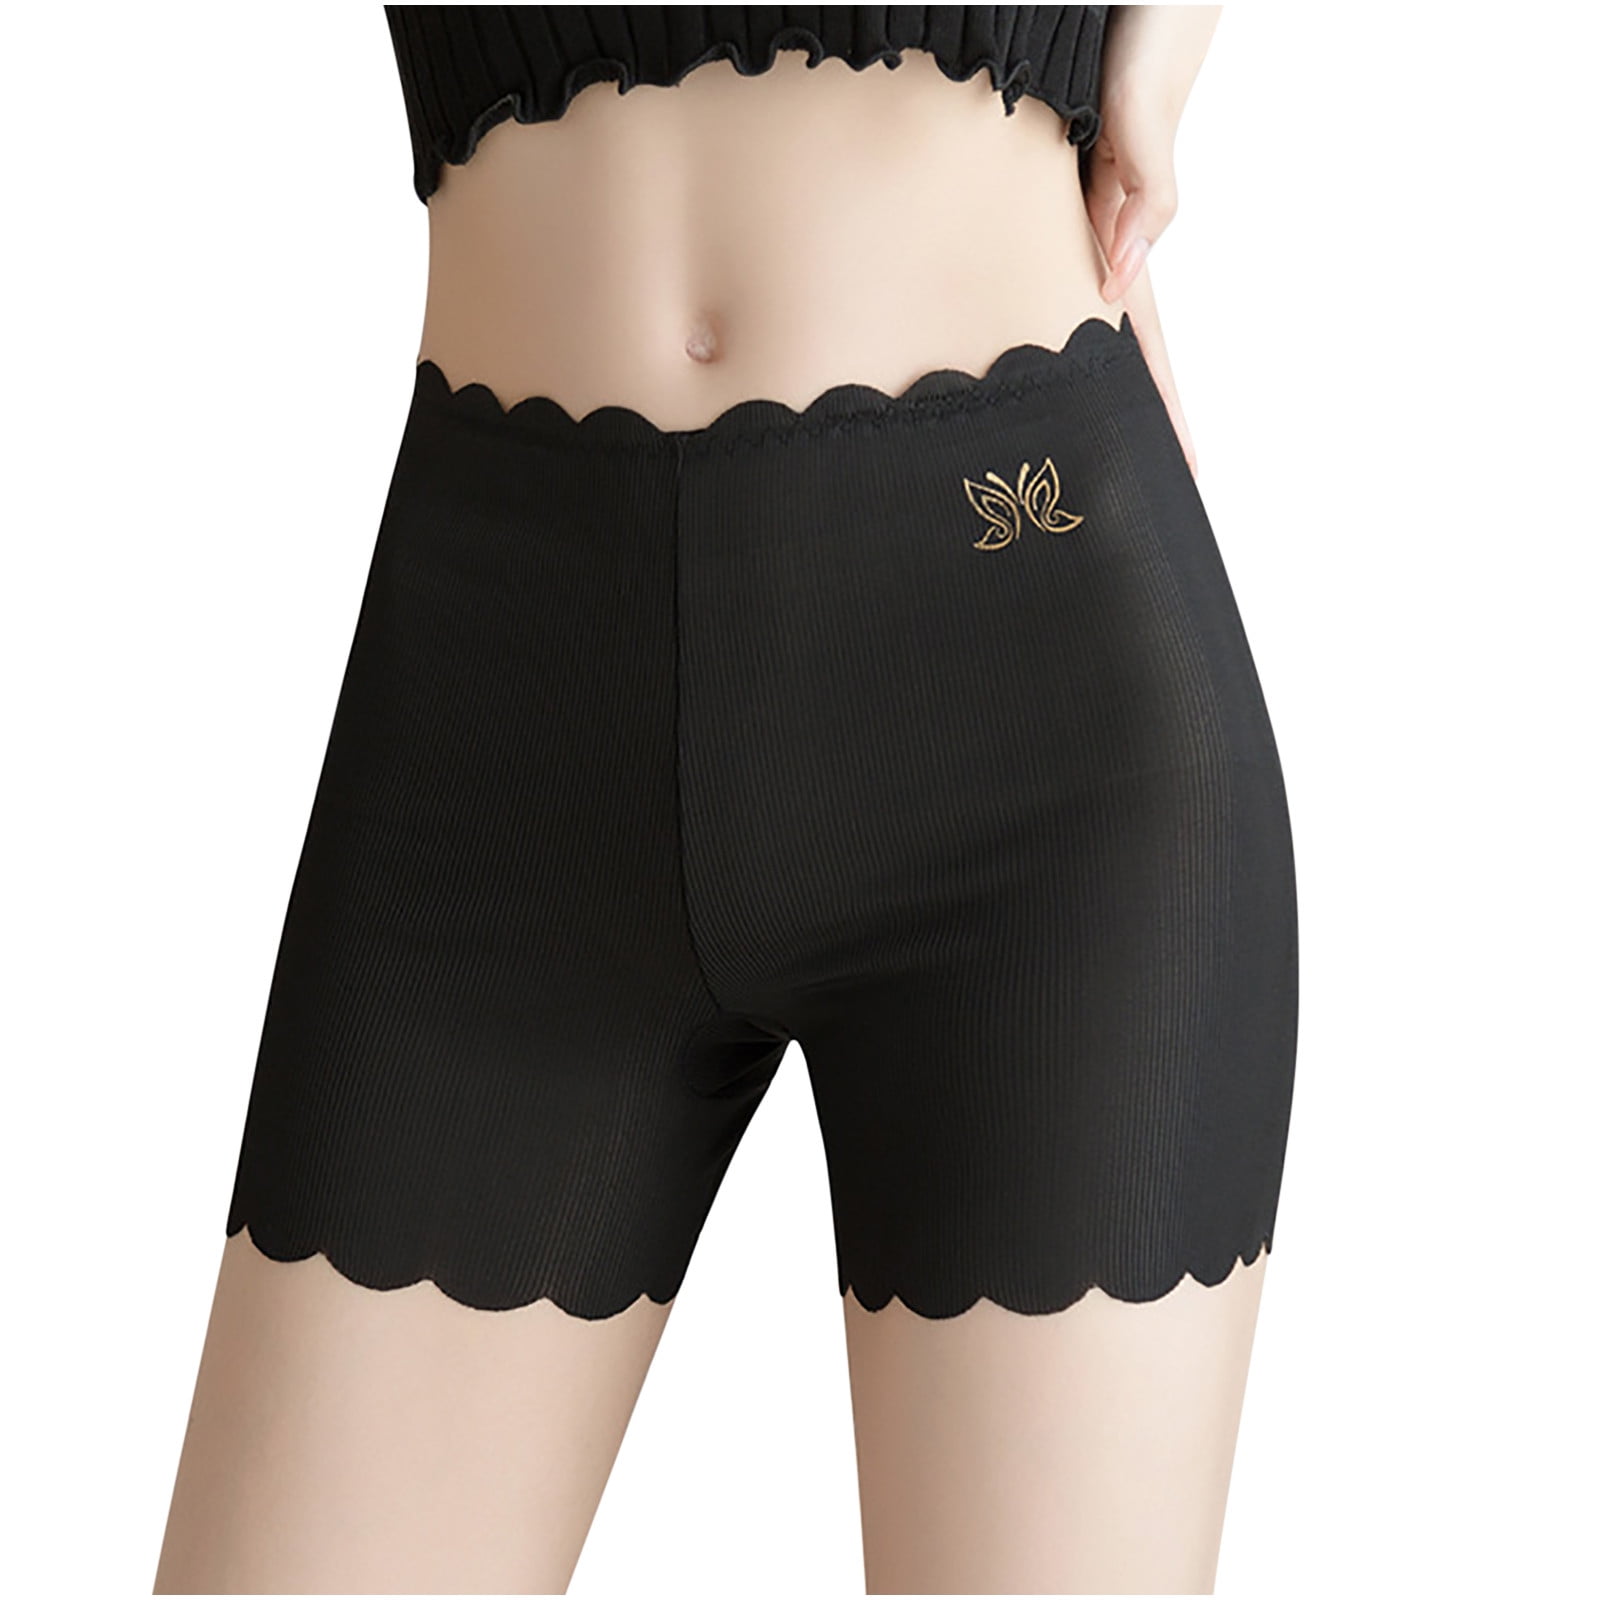 Slip Shorts for Under Dresses Women Anti Chafing Shorts Underwear Seamless  Under Dress Shorts Boyshorts Panties